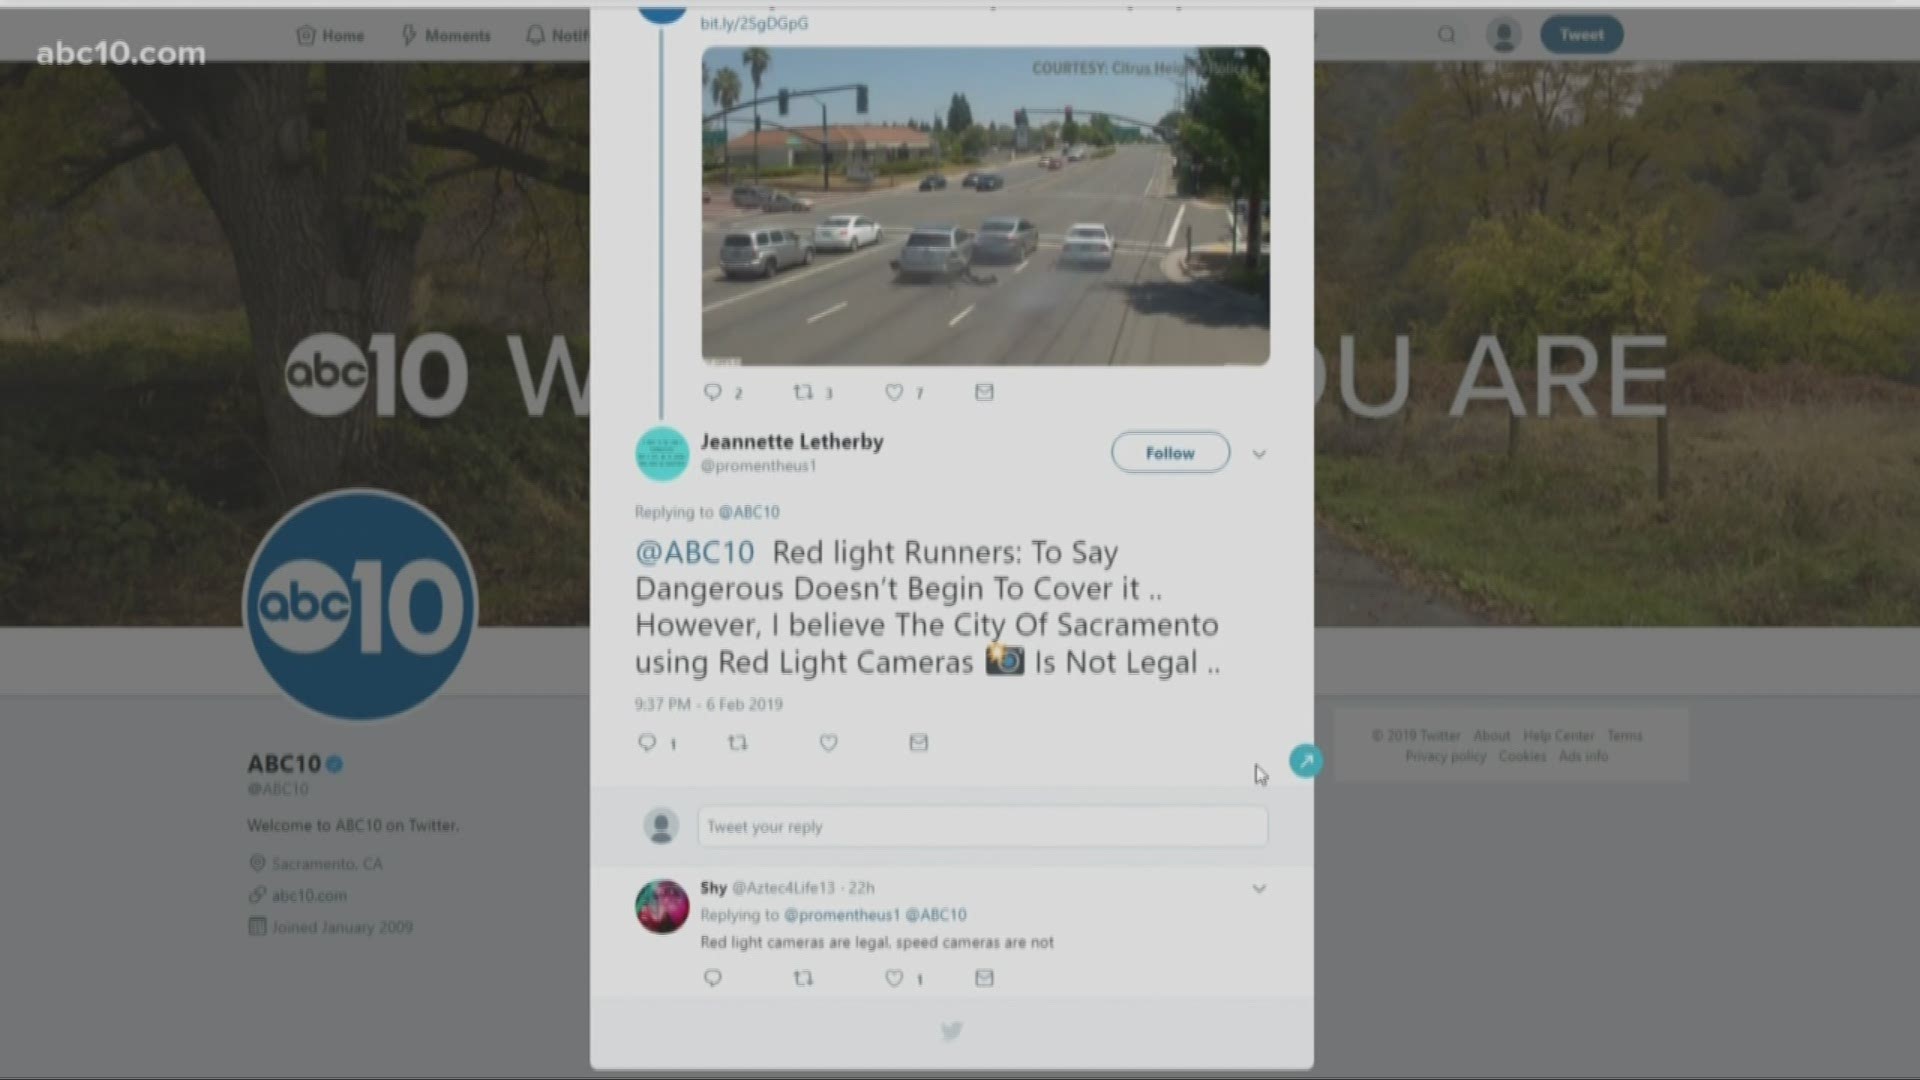 So, are red light cameras legal in Sacramento? Let's verify.